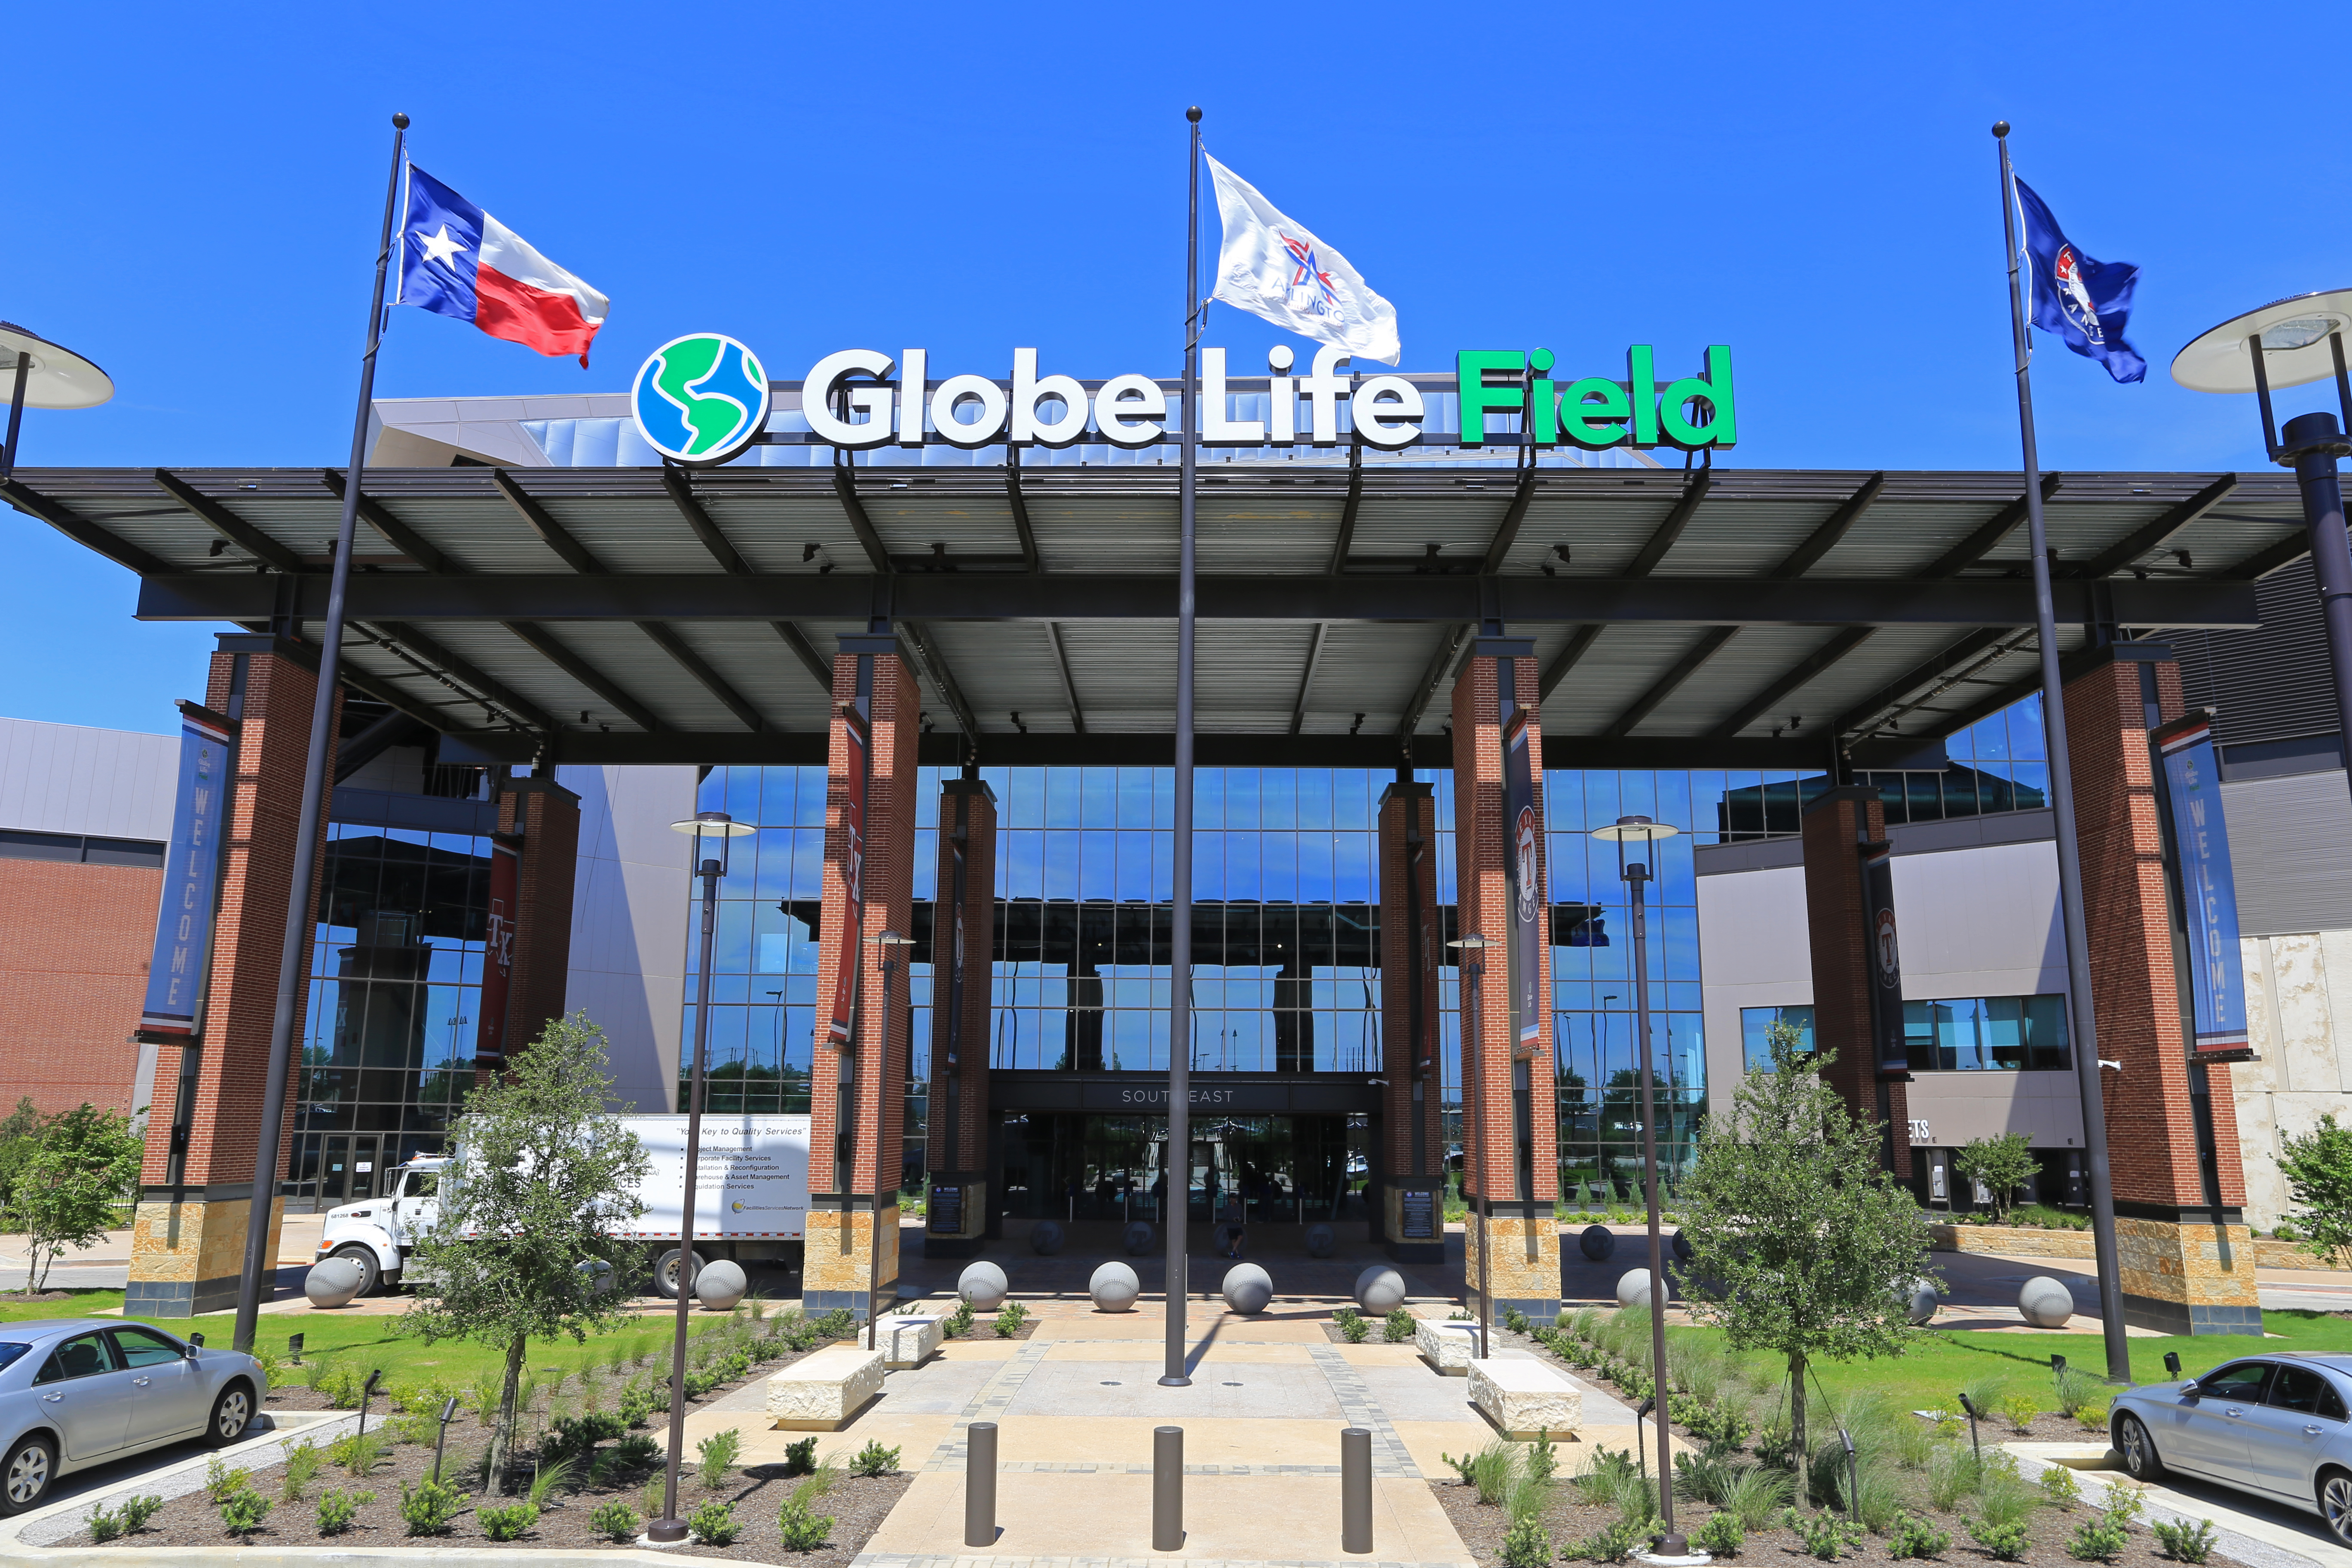 Texas Rangers - Globe Life Field